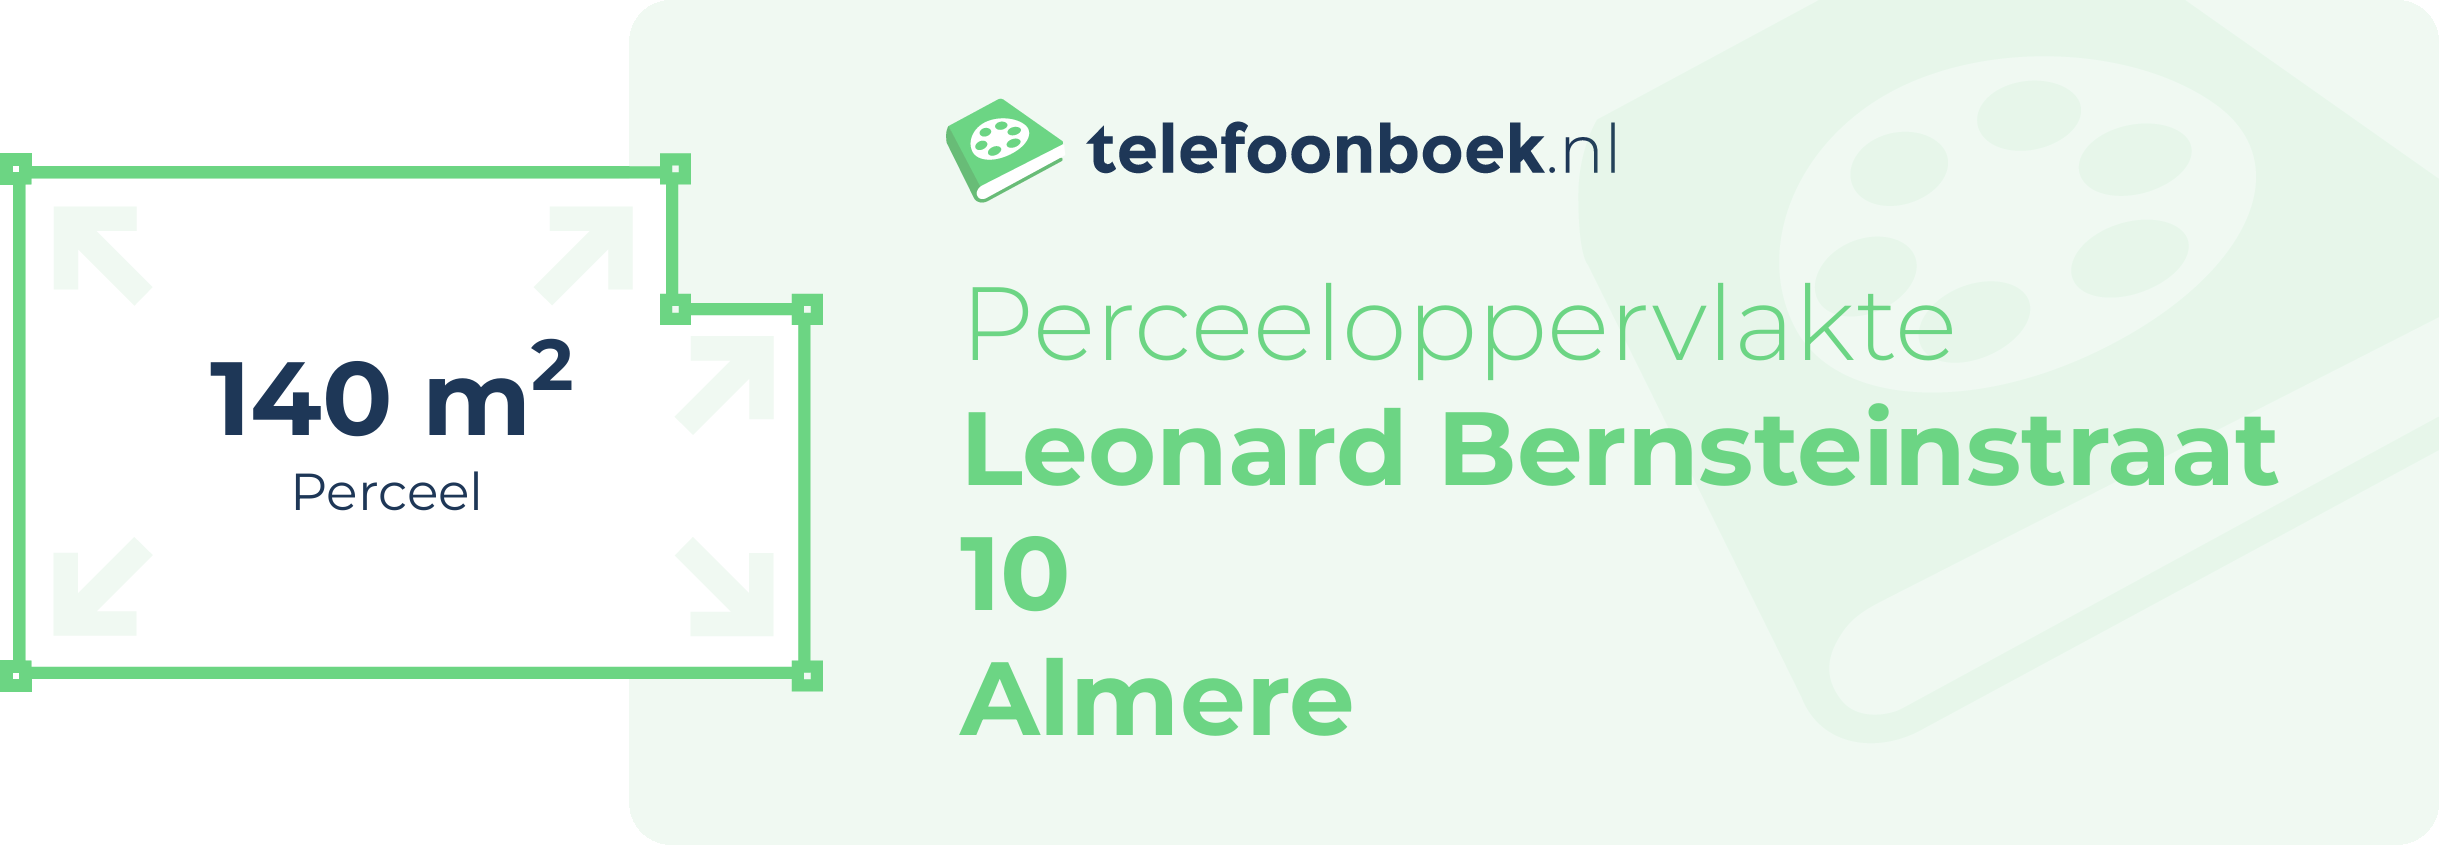 Perceeloppervlakte Leonard Bernsteinstraat 10 Almere